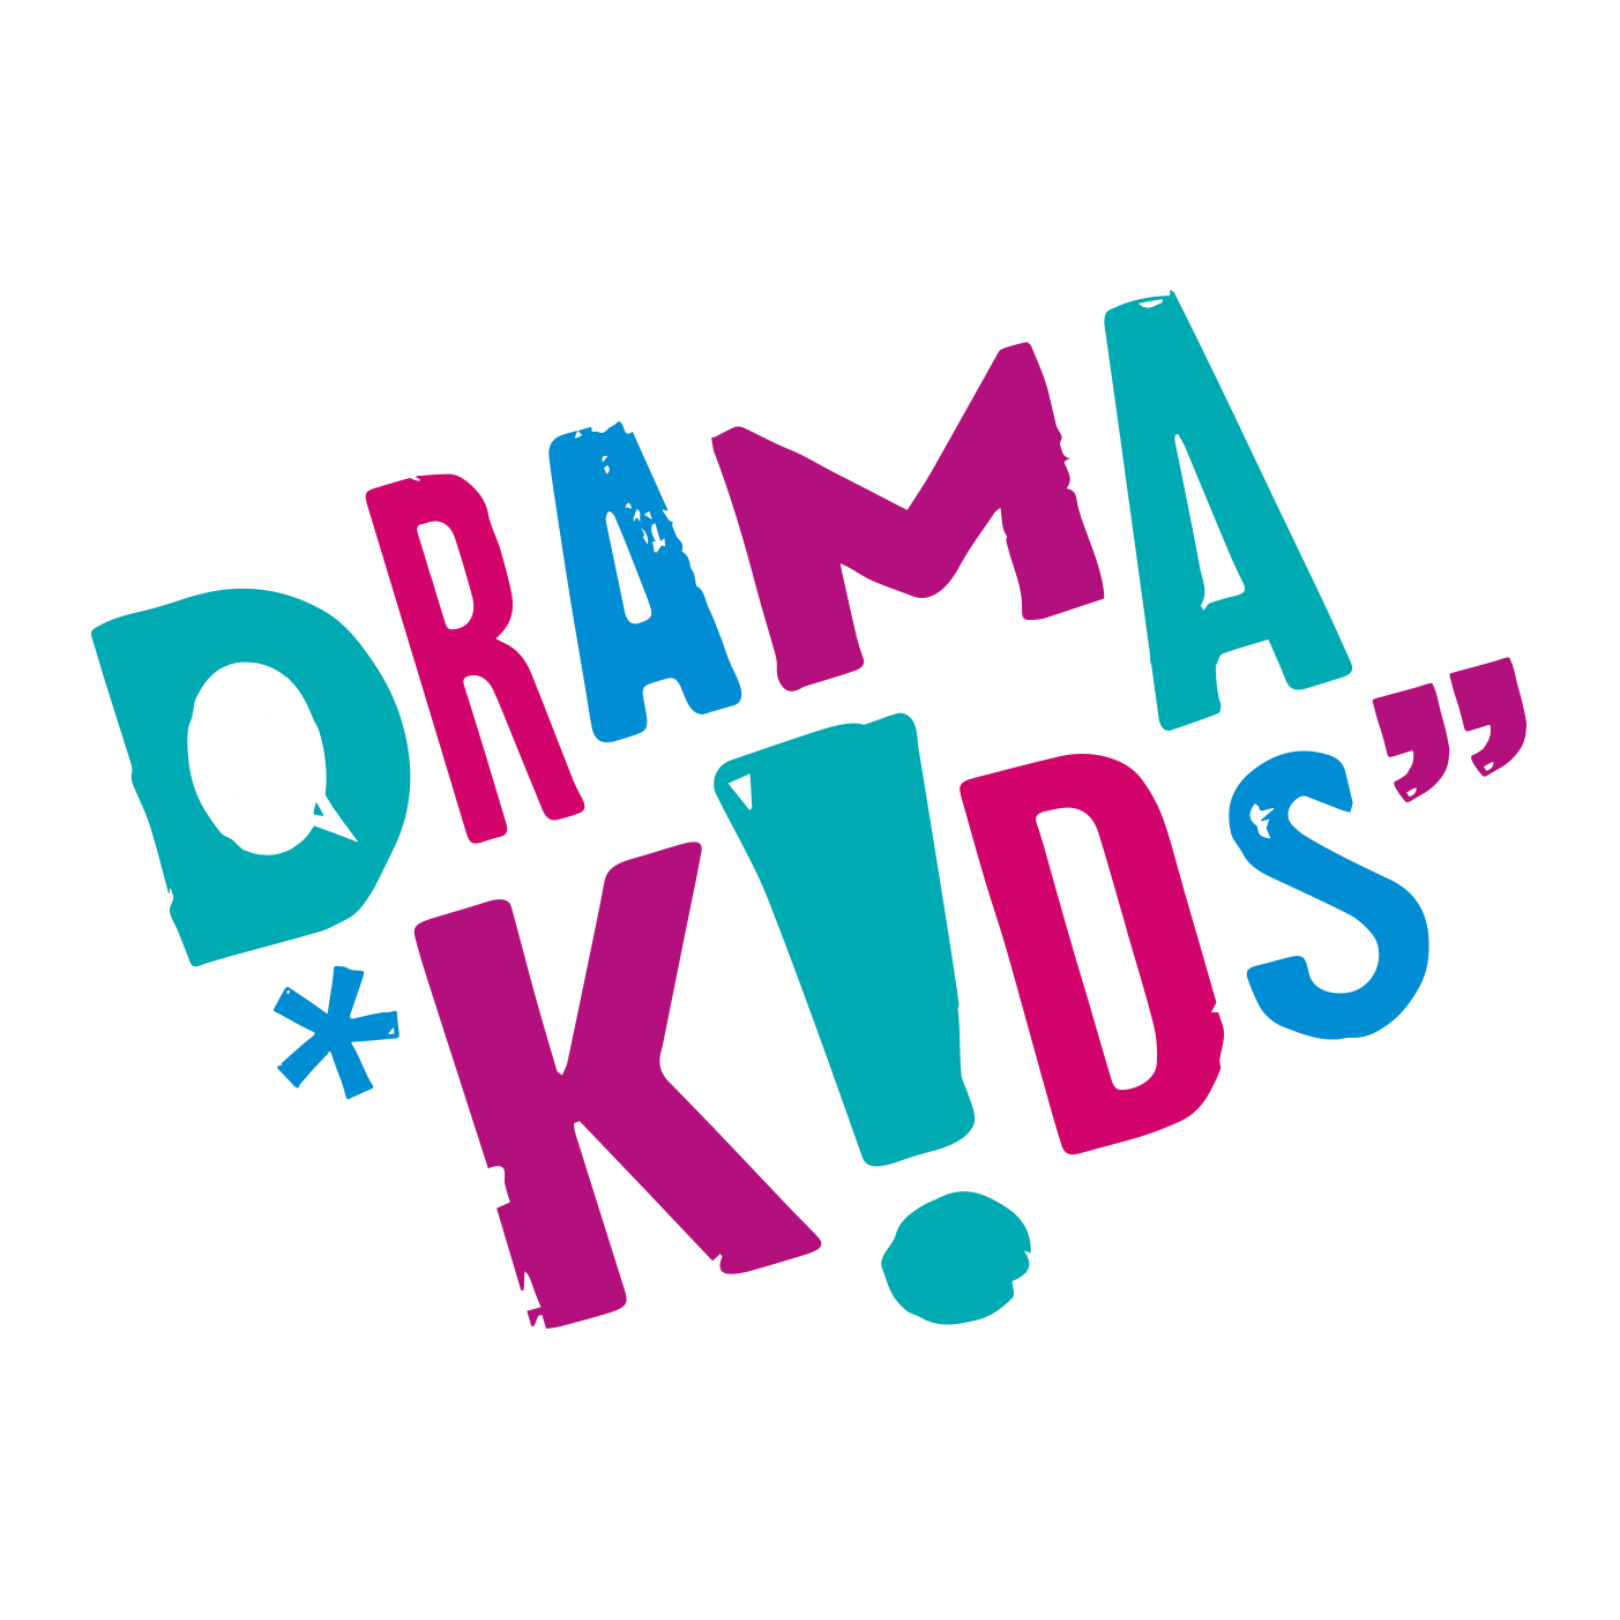 Drama classes for children